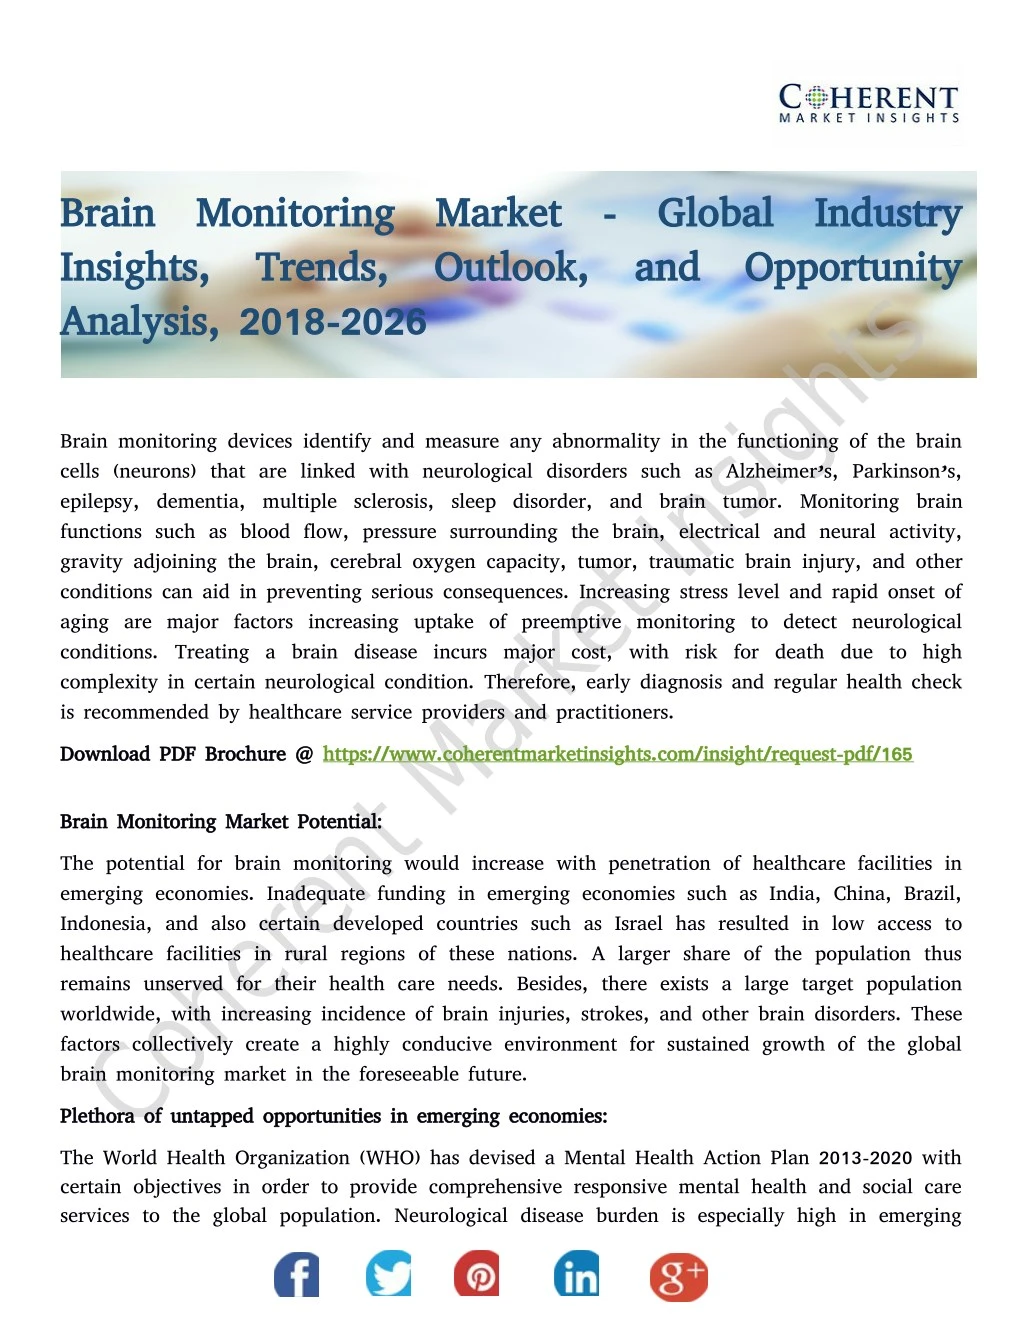 brain monitoring market global industry brain